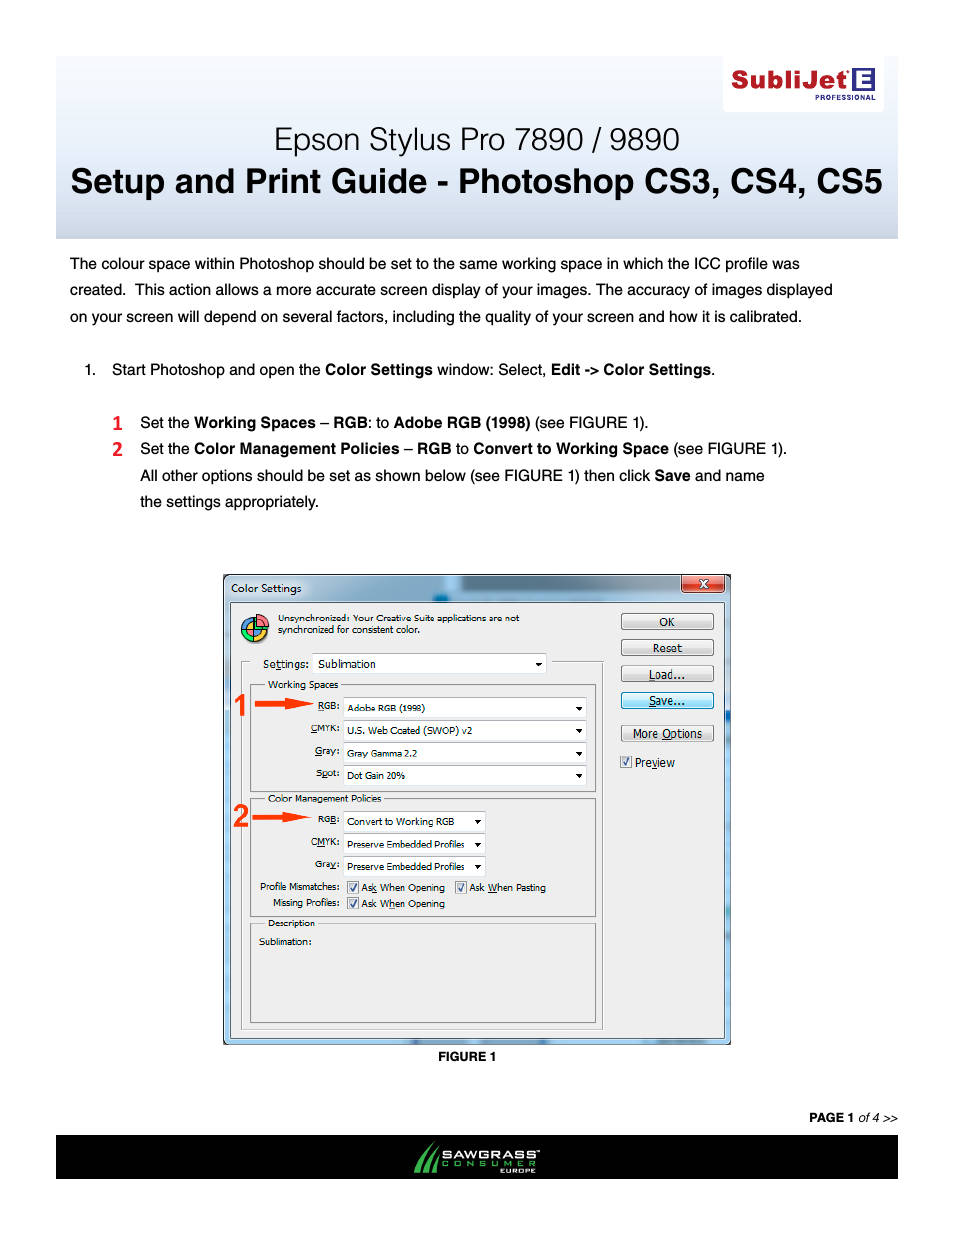 SubliJet E Epson Stylus Pro 7890 (Windows ICC Profile Setup): Print & Setup Guide Photoshop CS3 - CS5